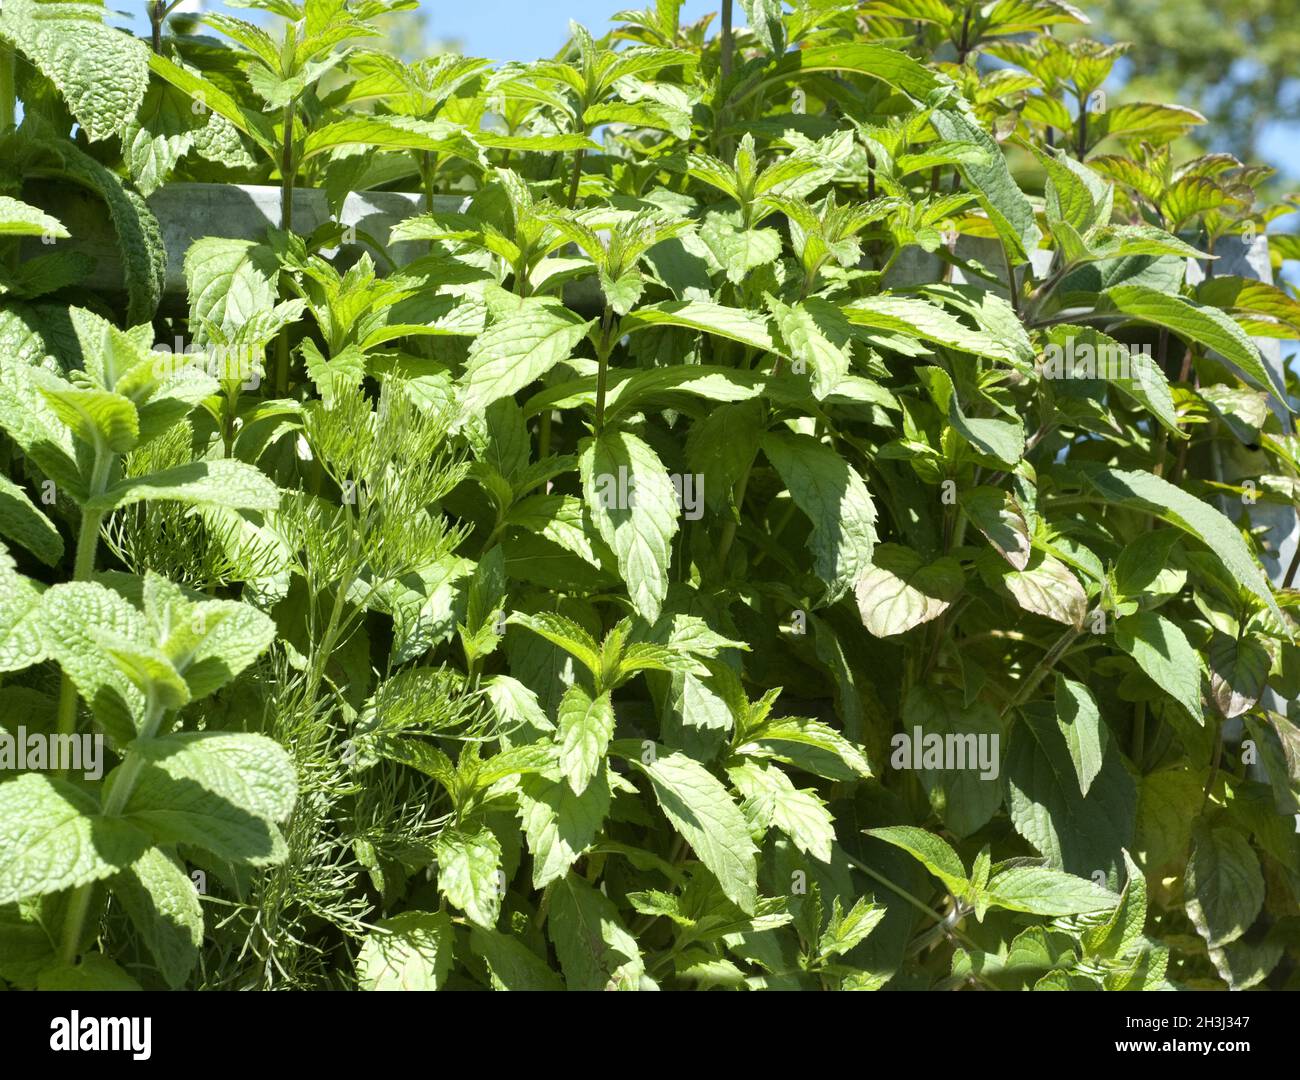 Peppermint; mentha, mint; Stock Photo